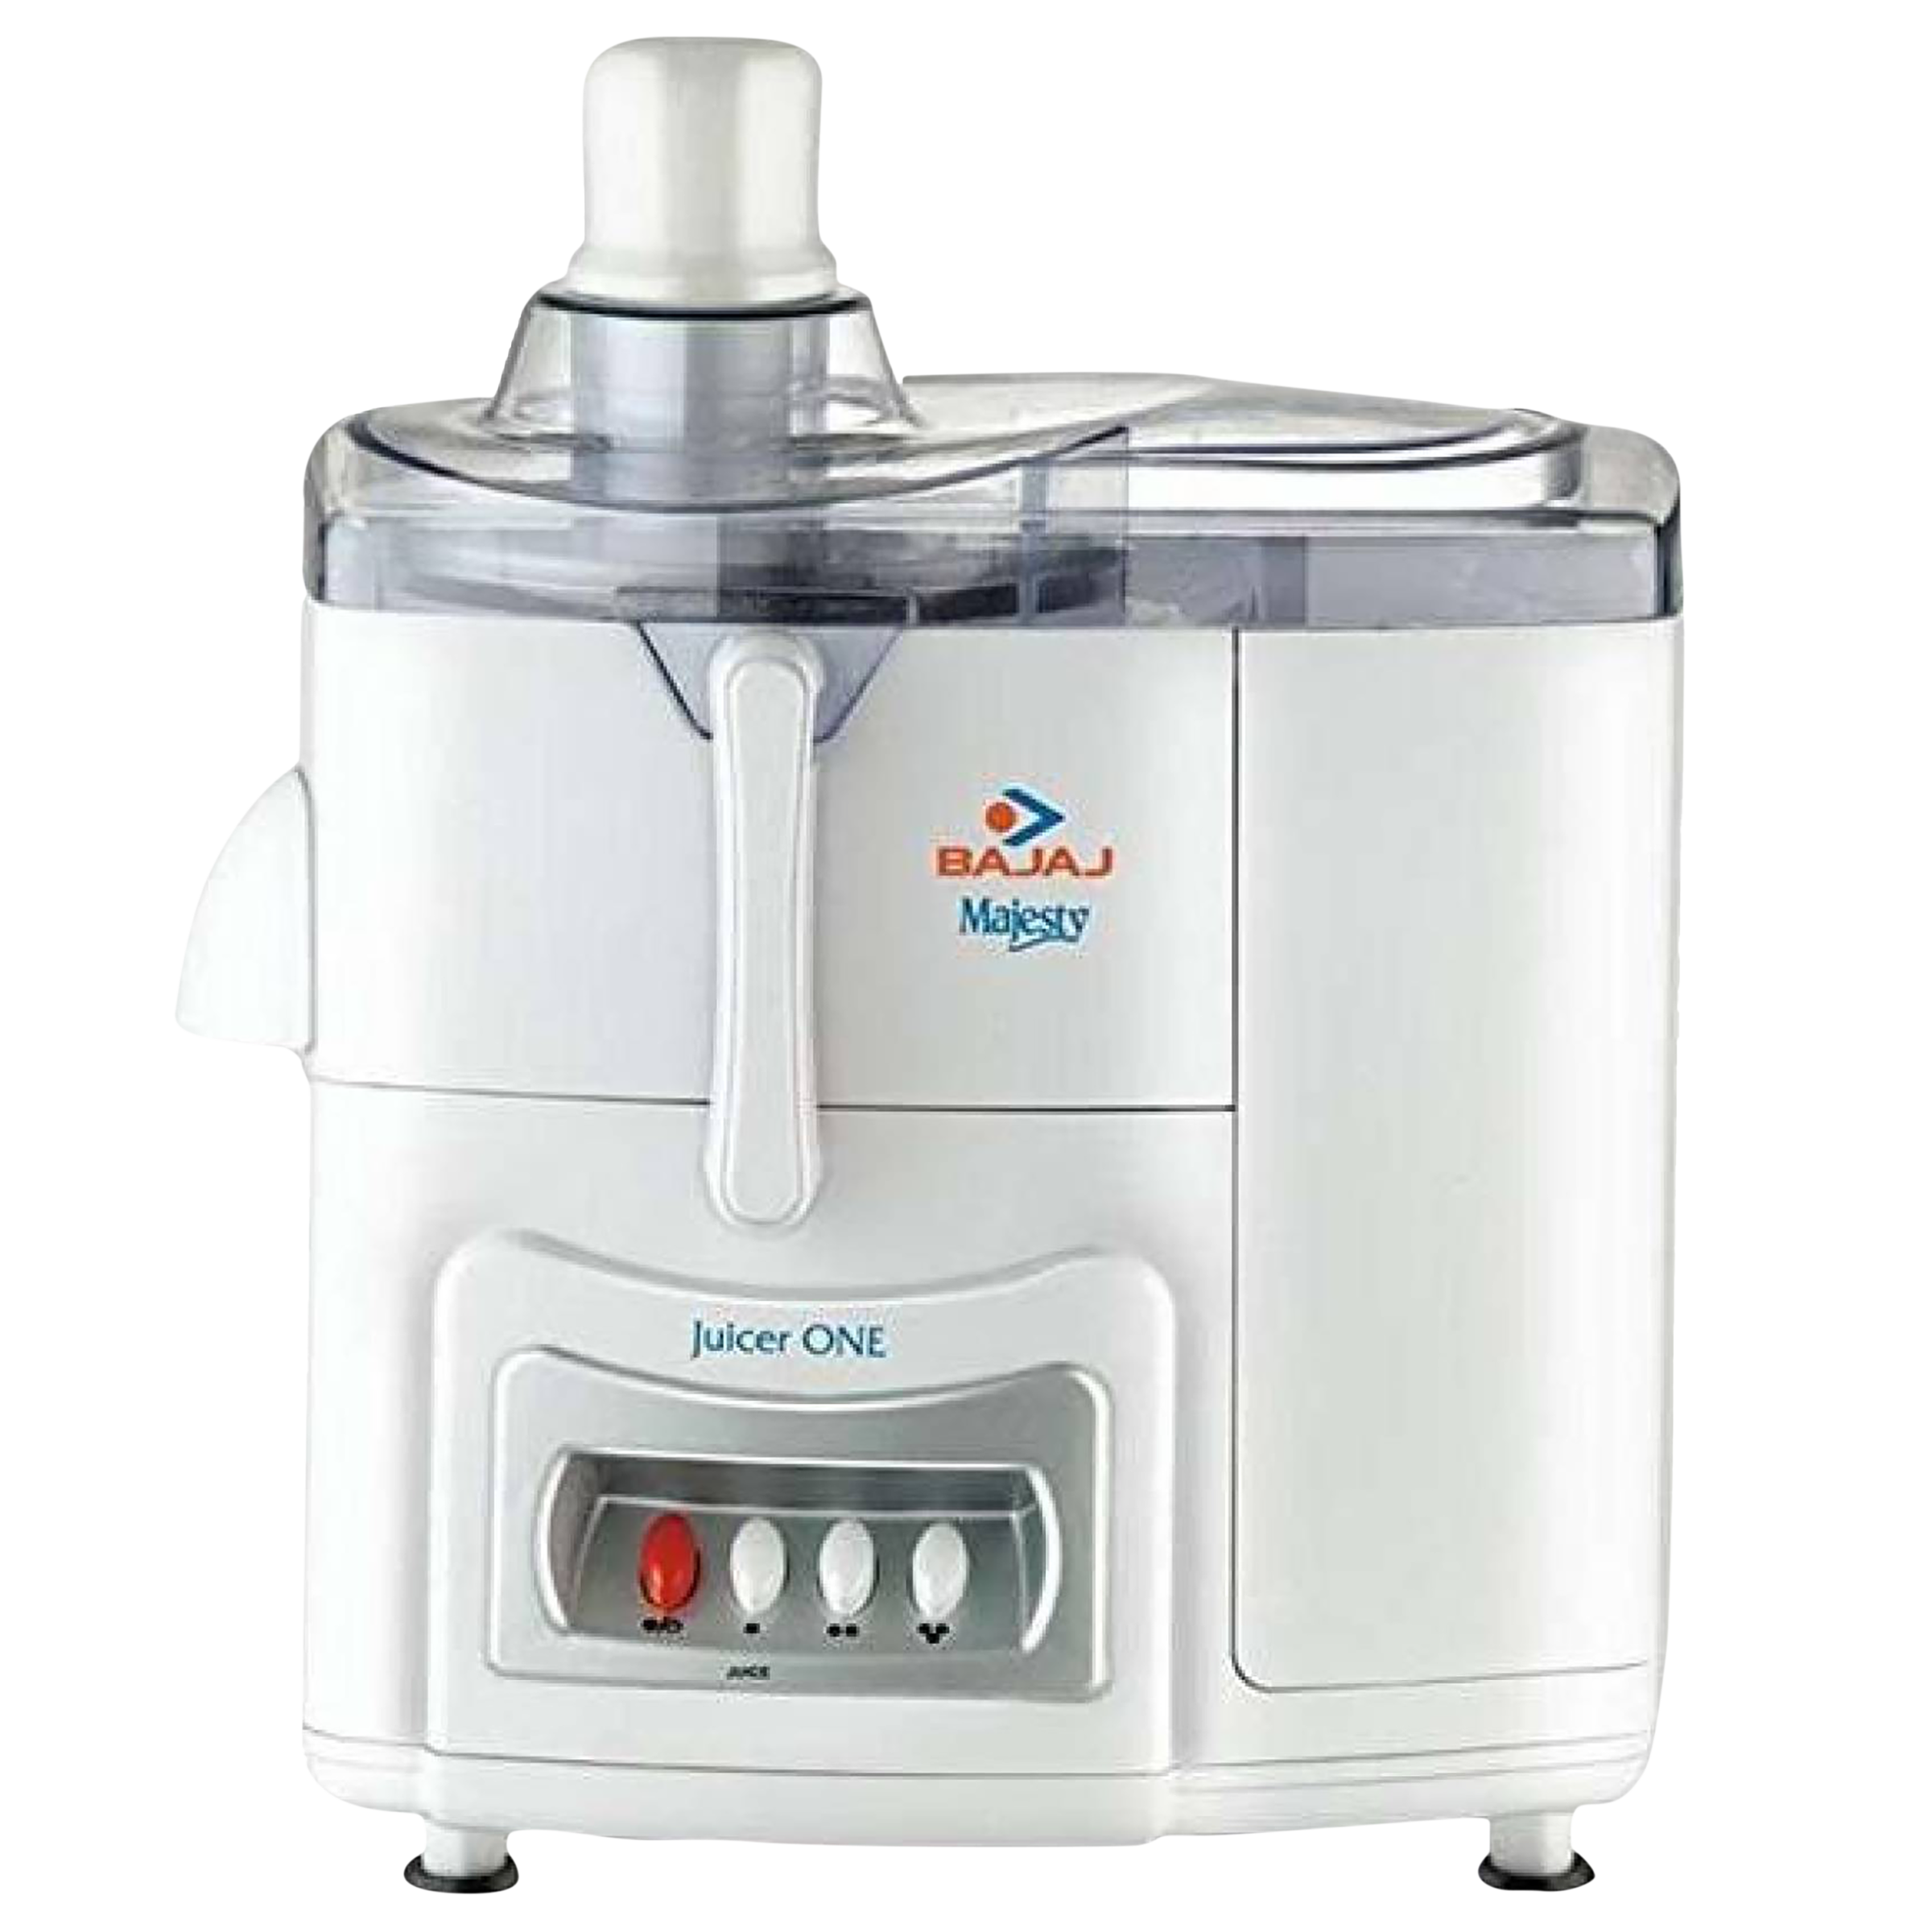 Buy Bajaj Majesty Juicer One 500 Watt Juicer (18000 RPM, 3 Speed Control, White) Online - Croma